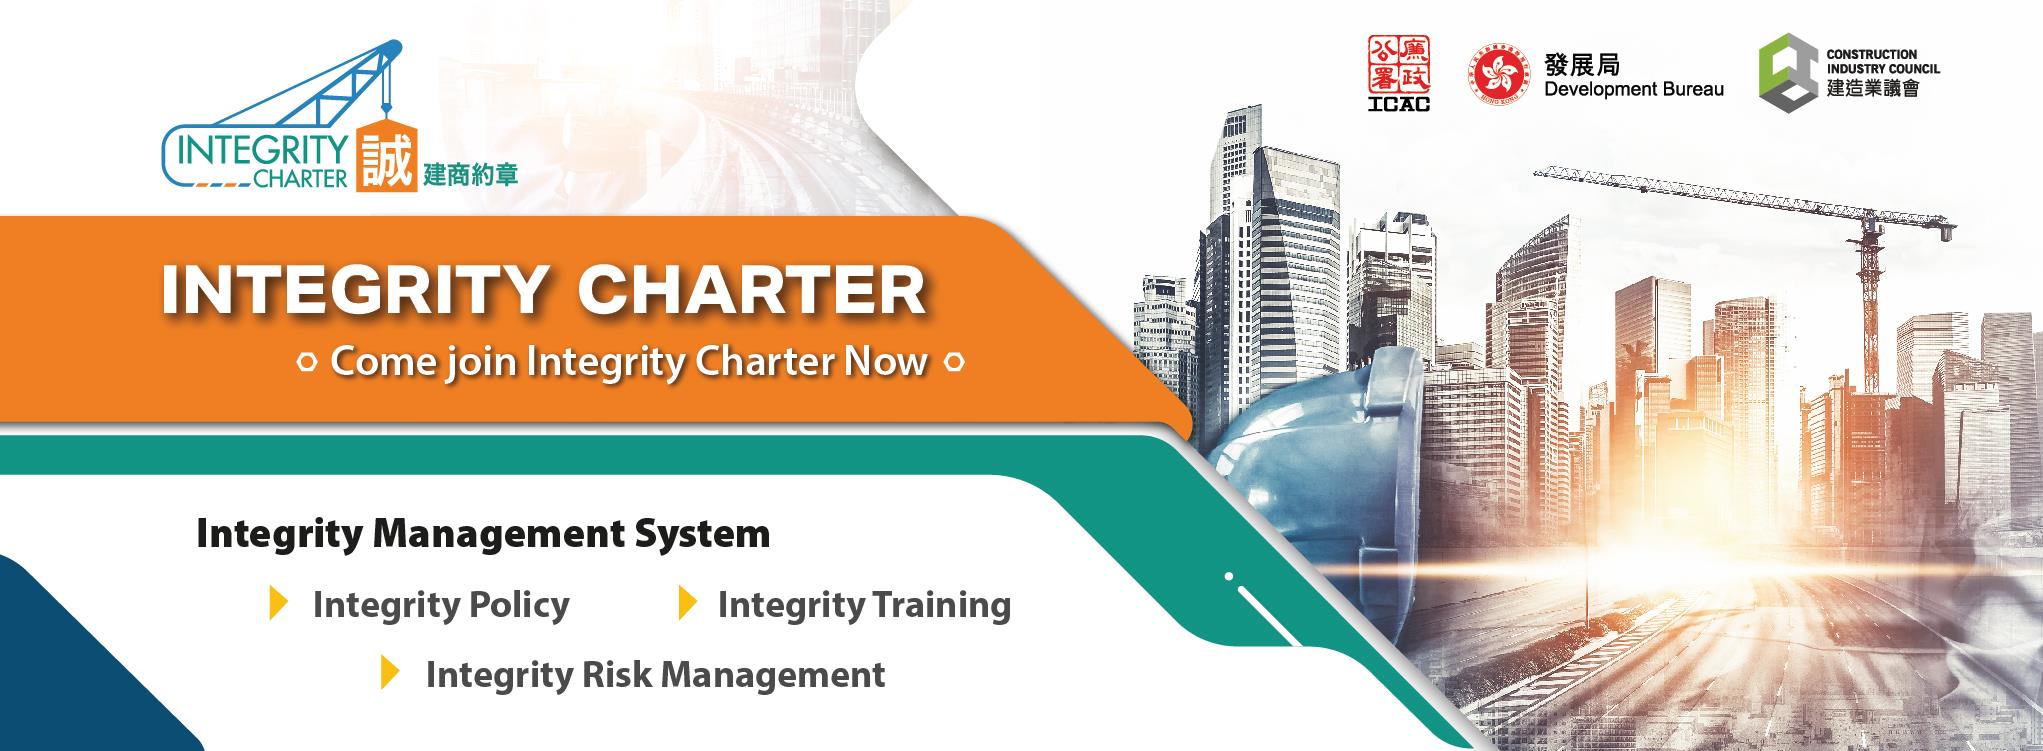 Integrity Charter (ebanner) English